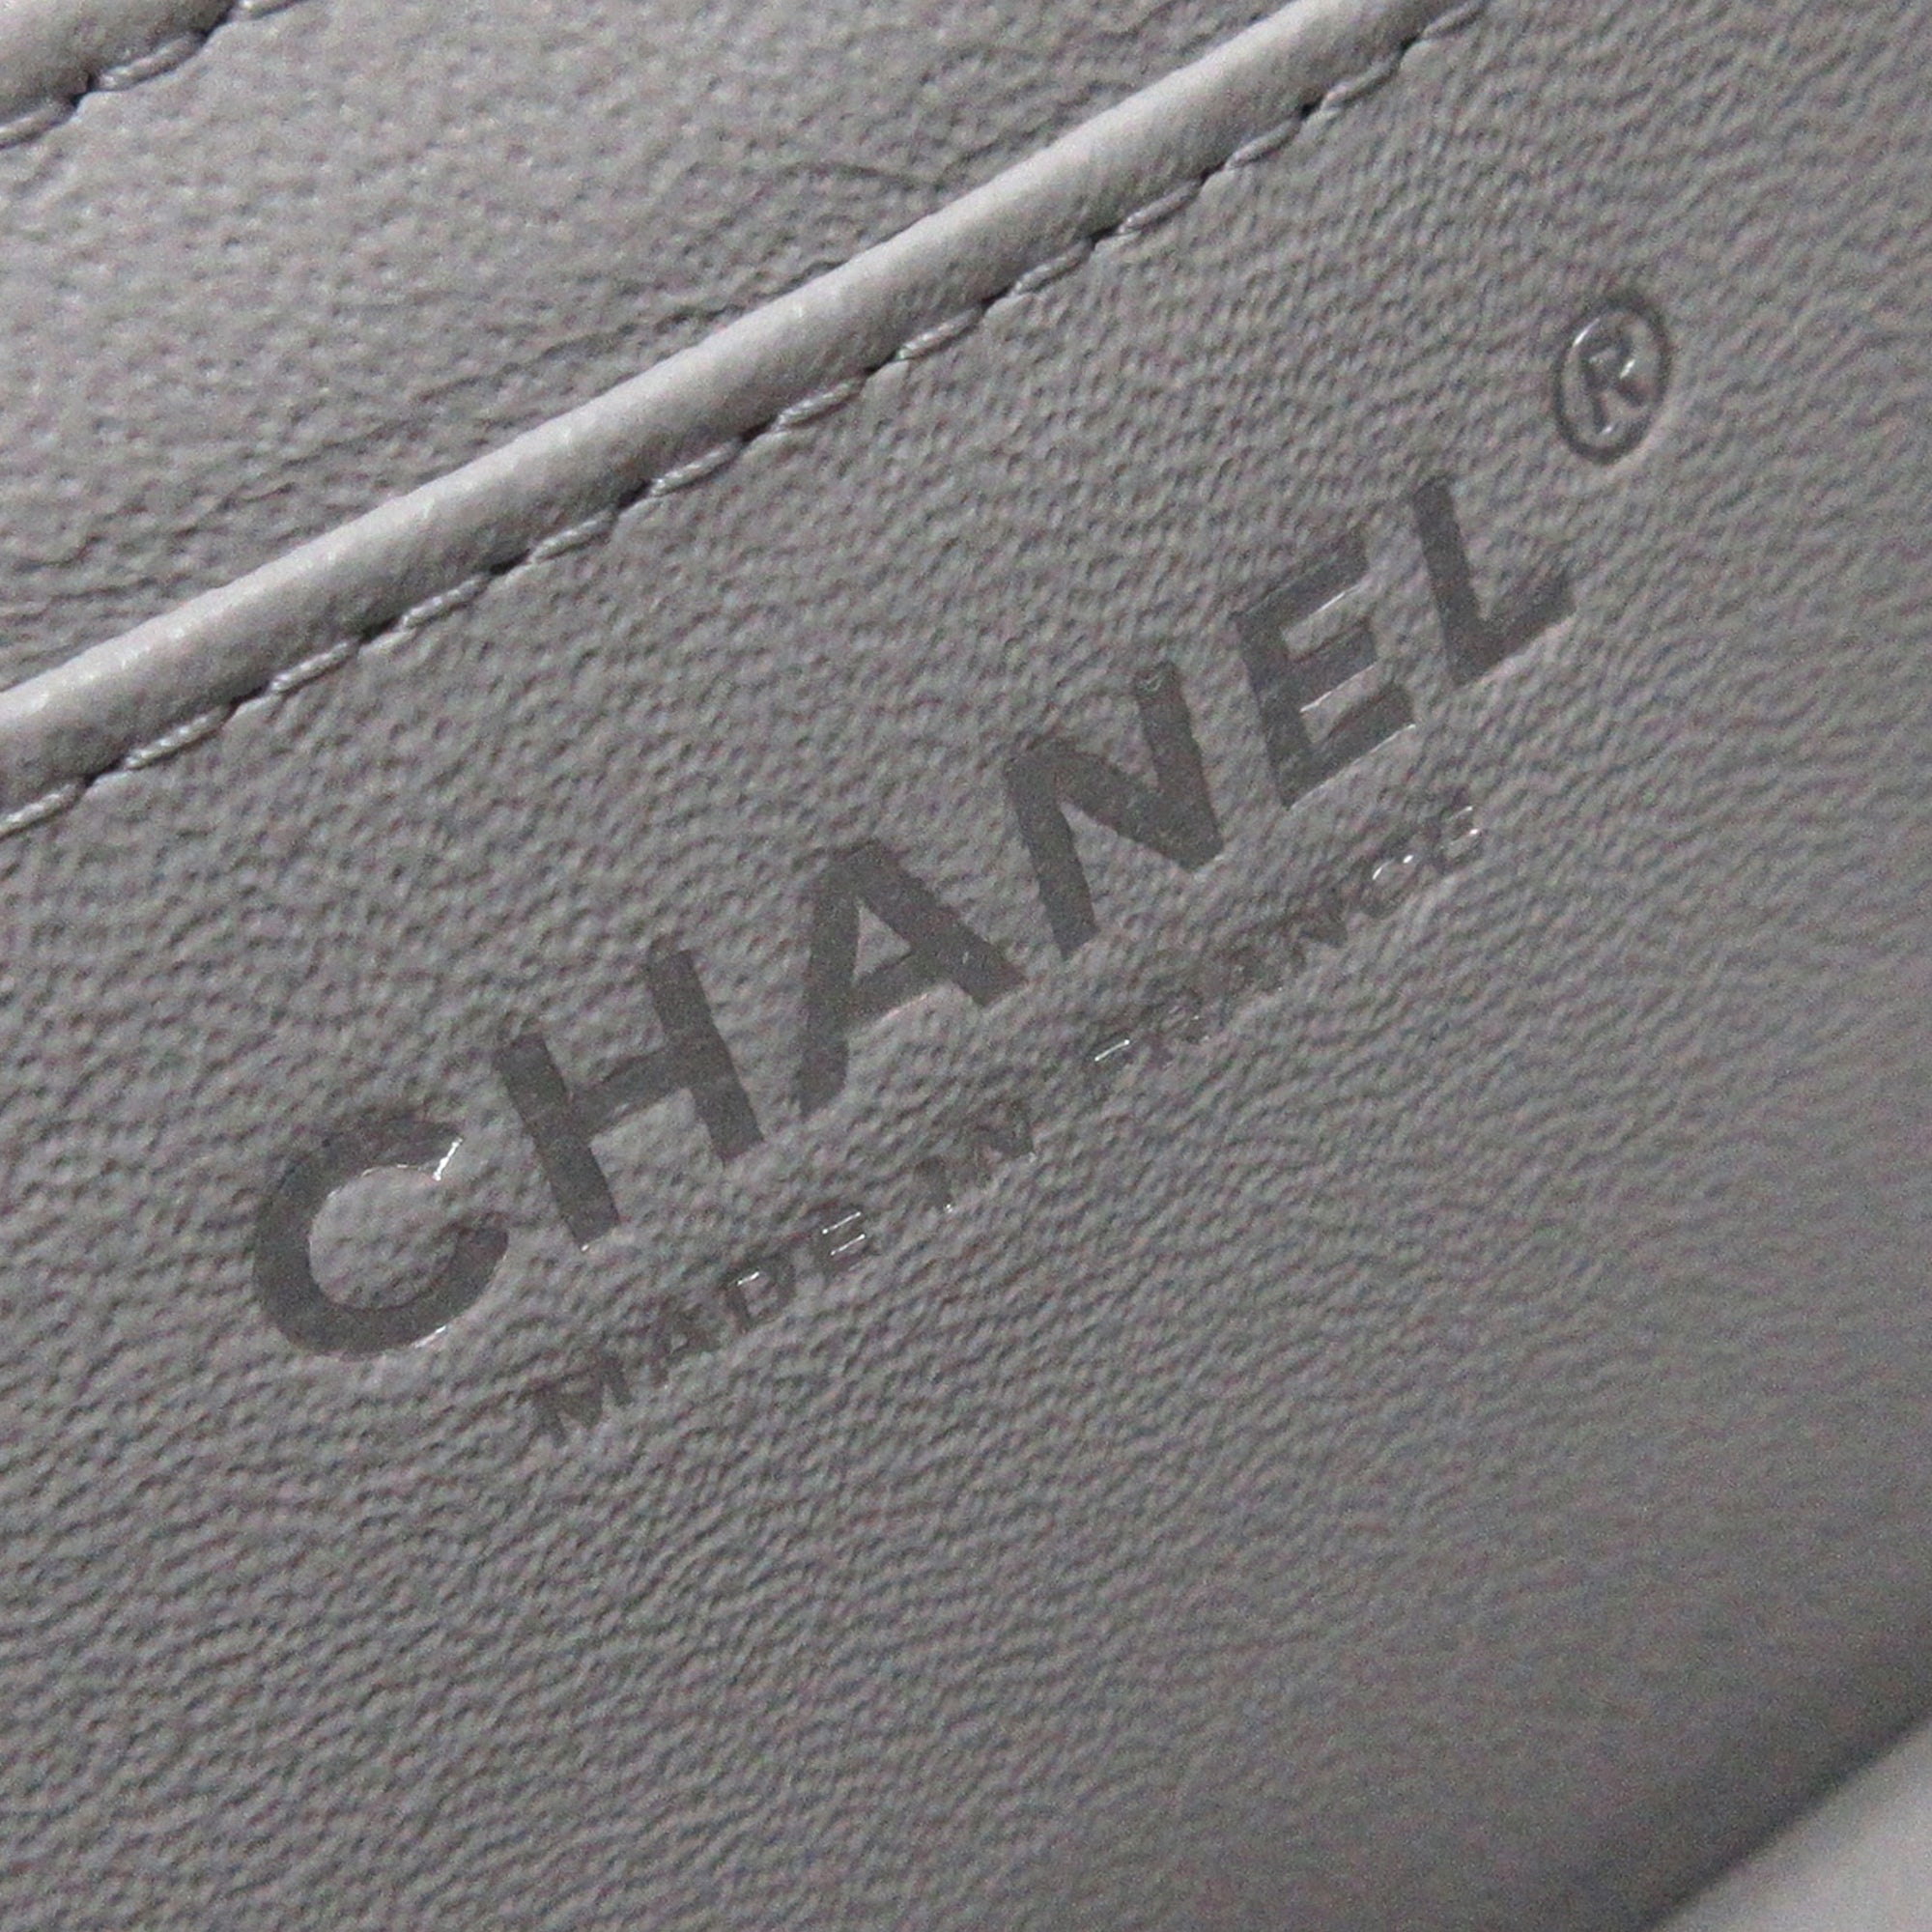 Cra-wallonieShops Revival, Chanel Mini Chain Bag